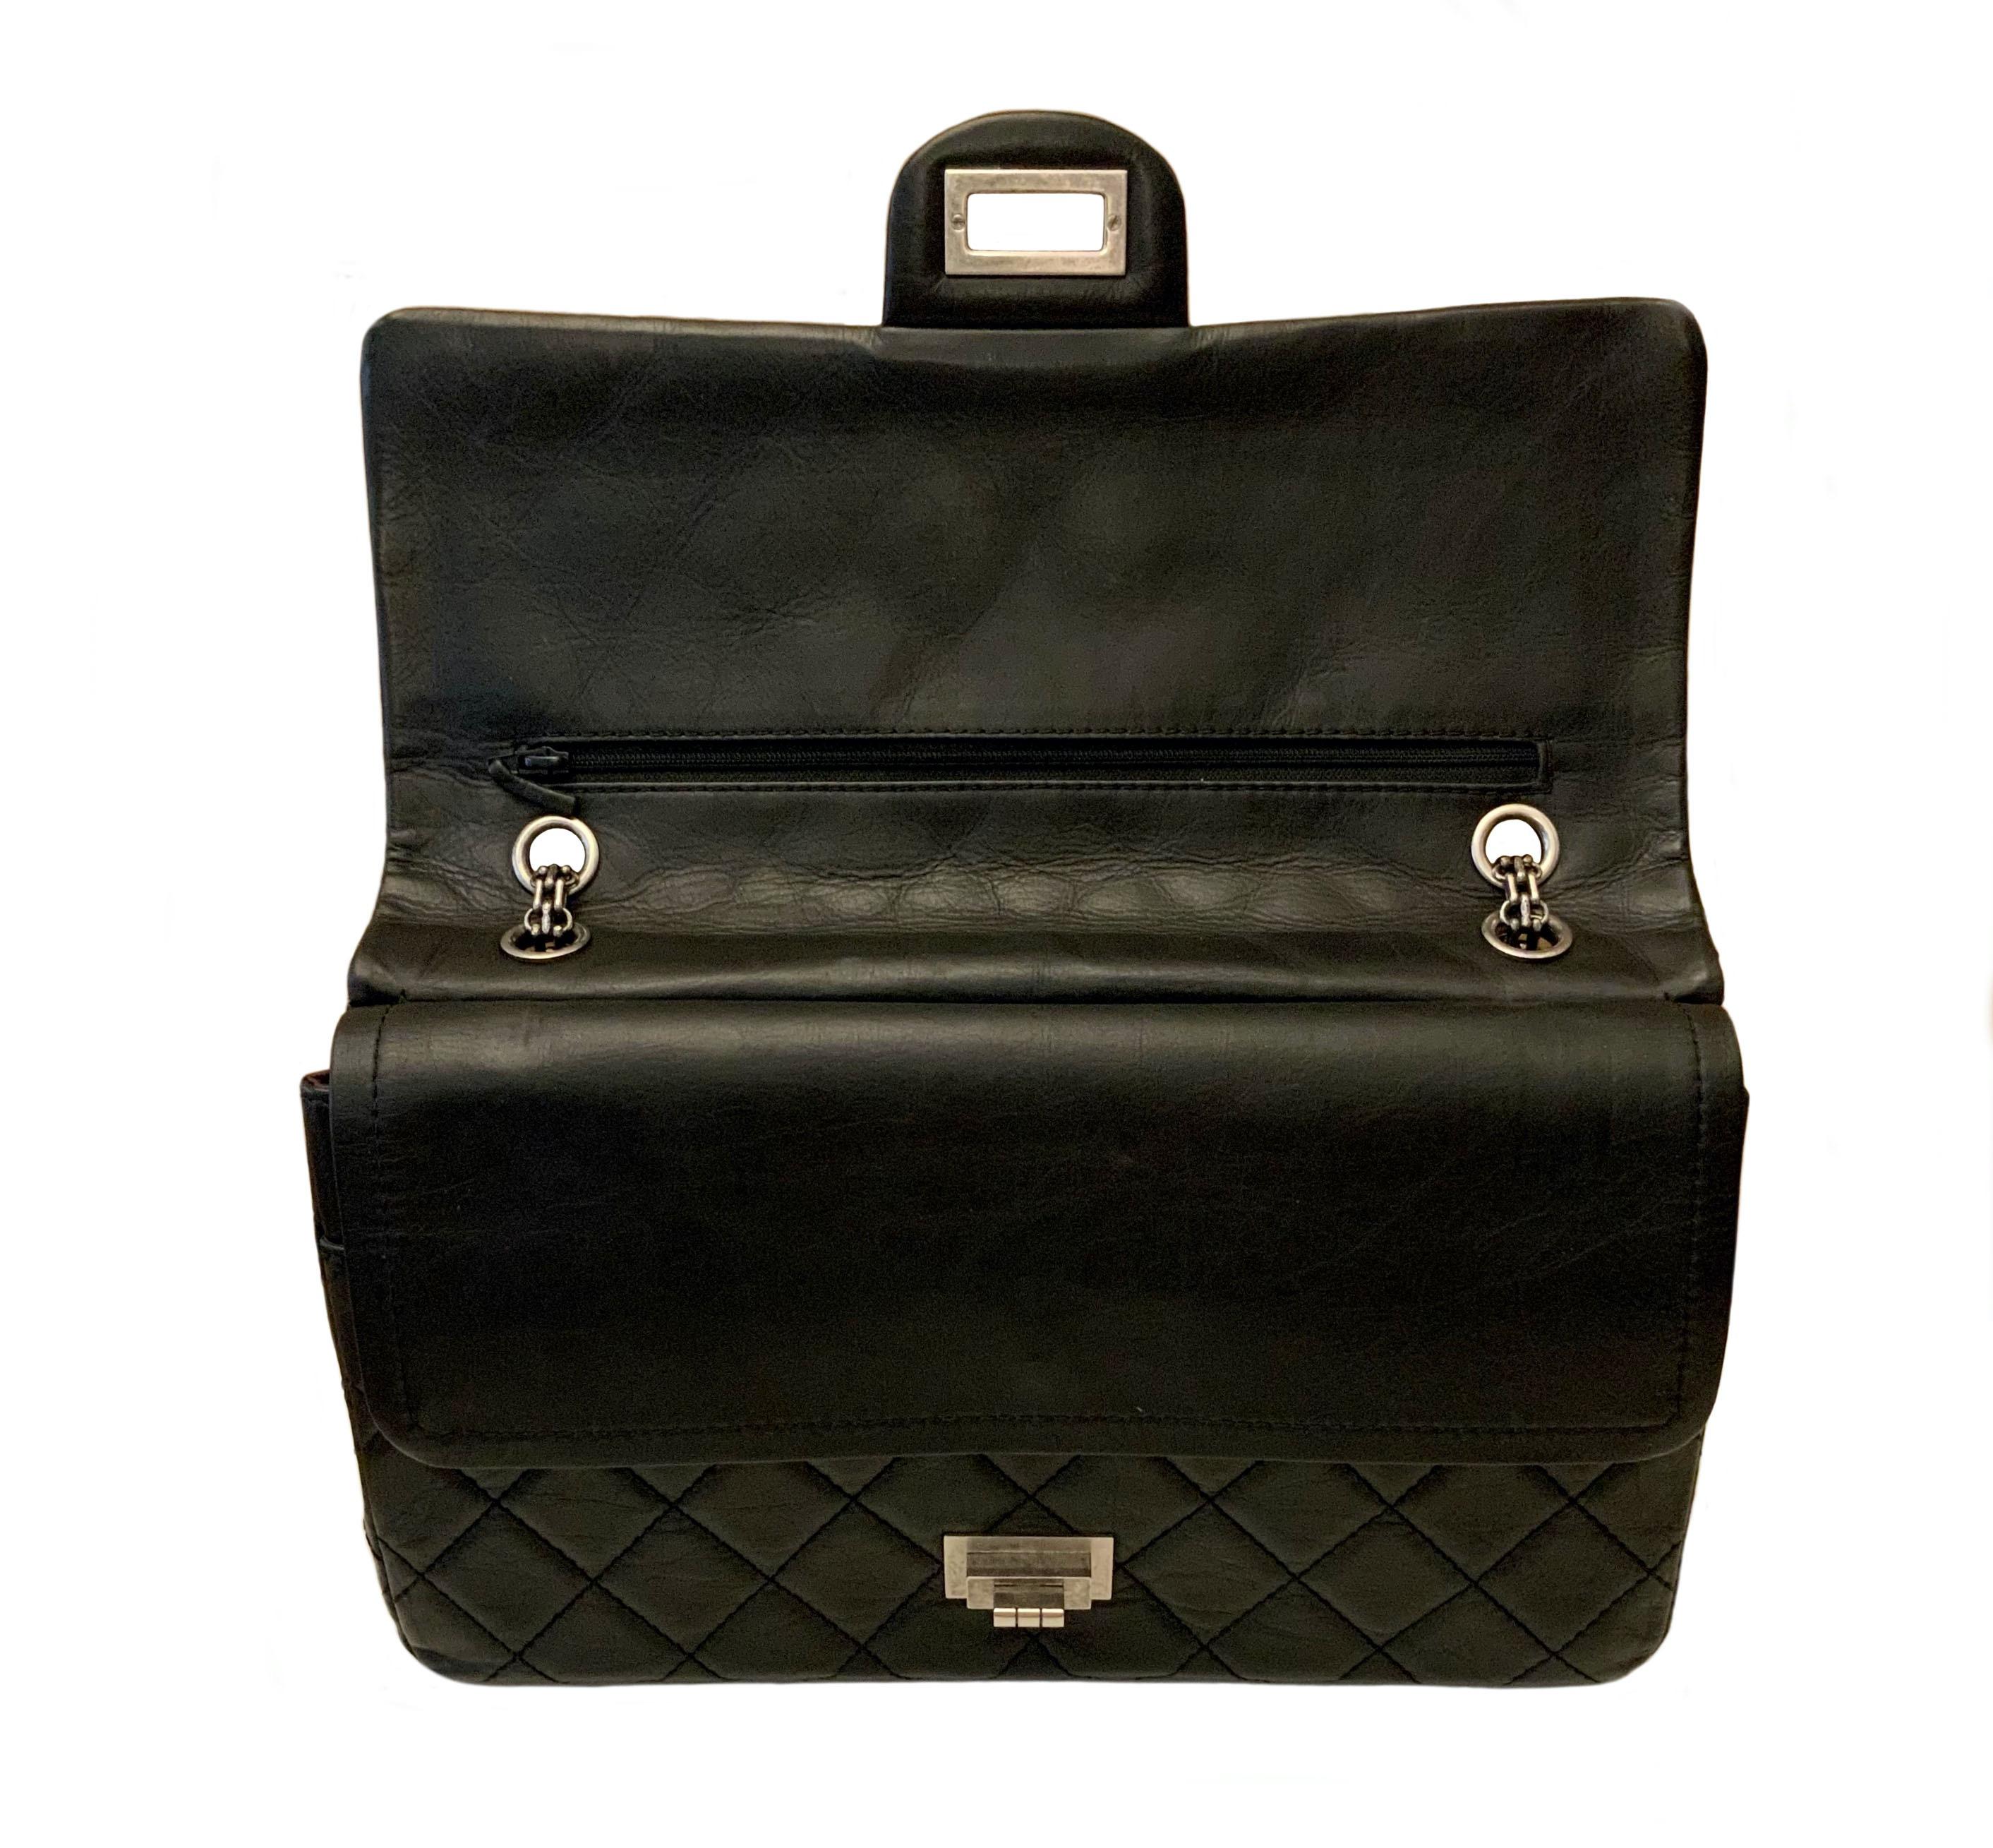 Chanel 2.55 Reissue Black Leather 227 Bag 7